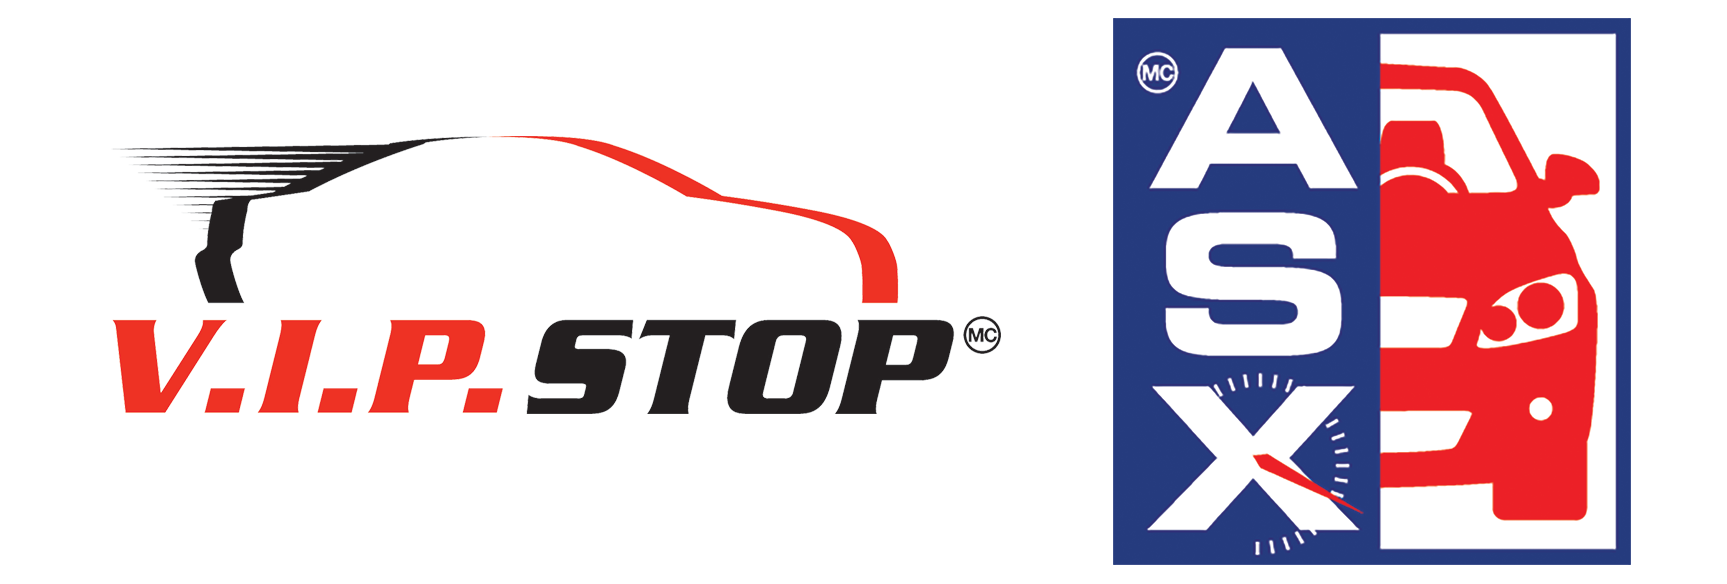 Napa Autopro repair shop web page